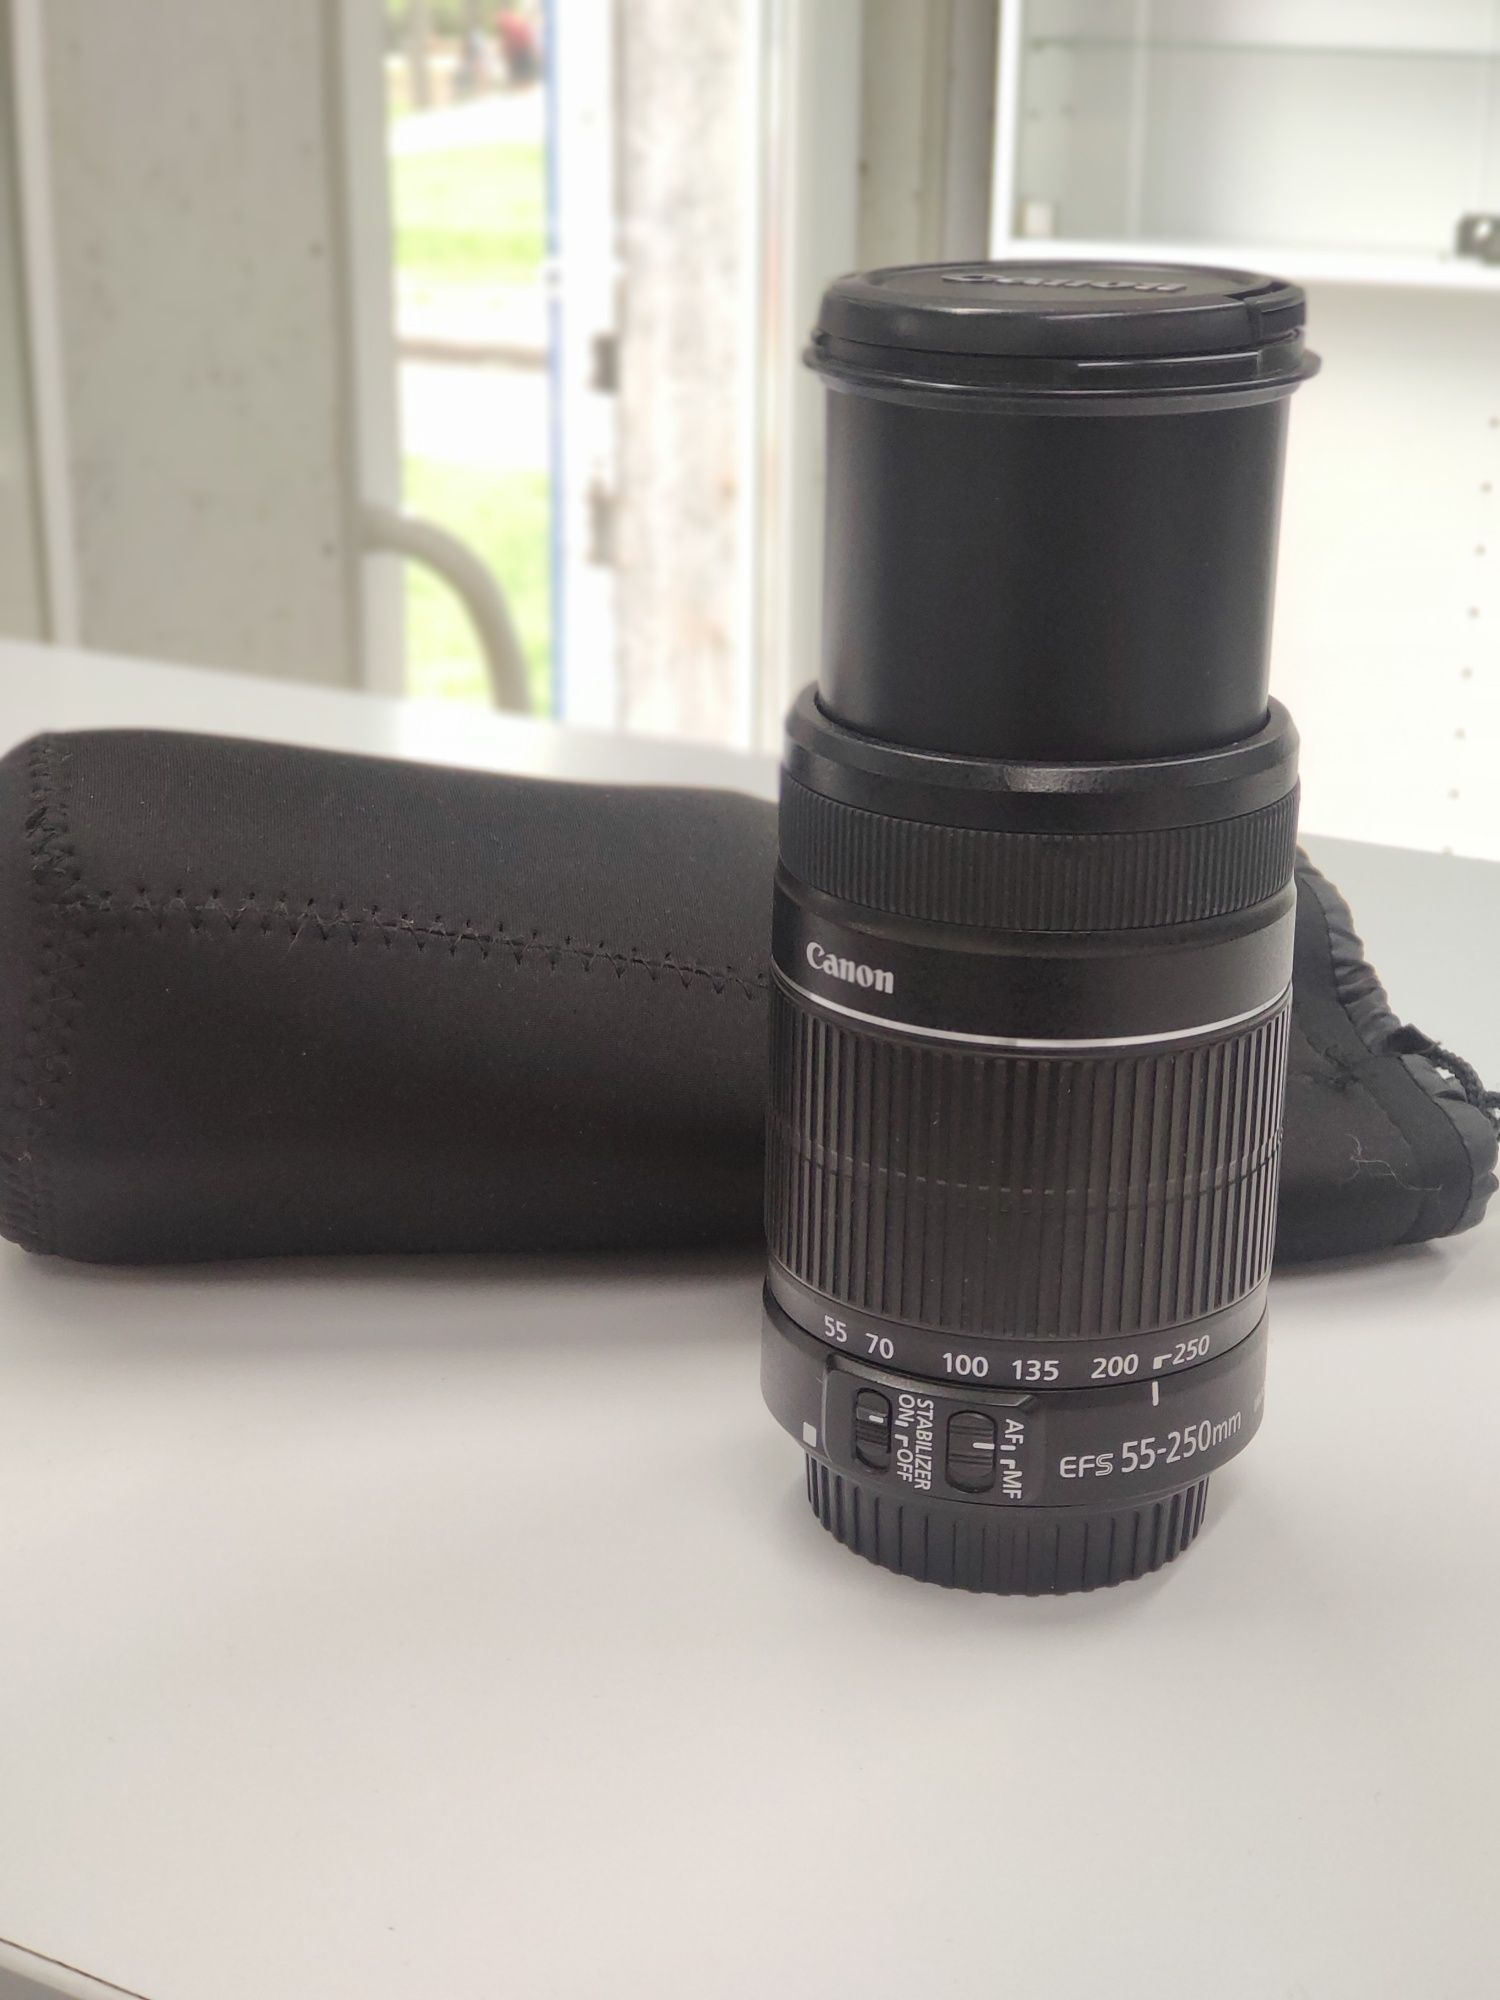 Теле-объектив Canon zoom lens EF-S 55-250 1:4-5.6 58mm